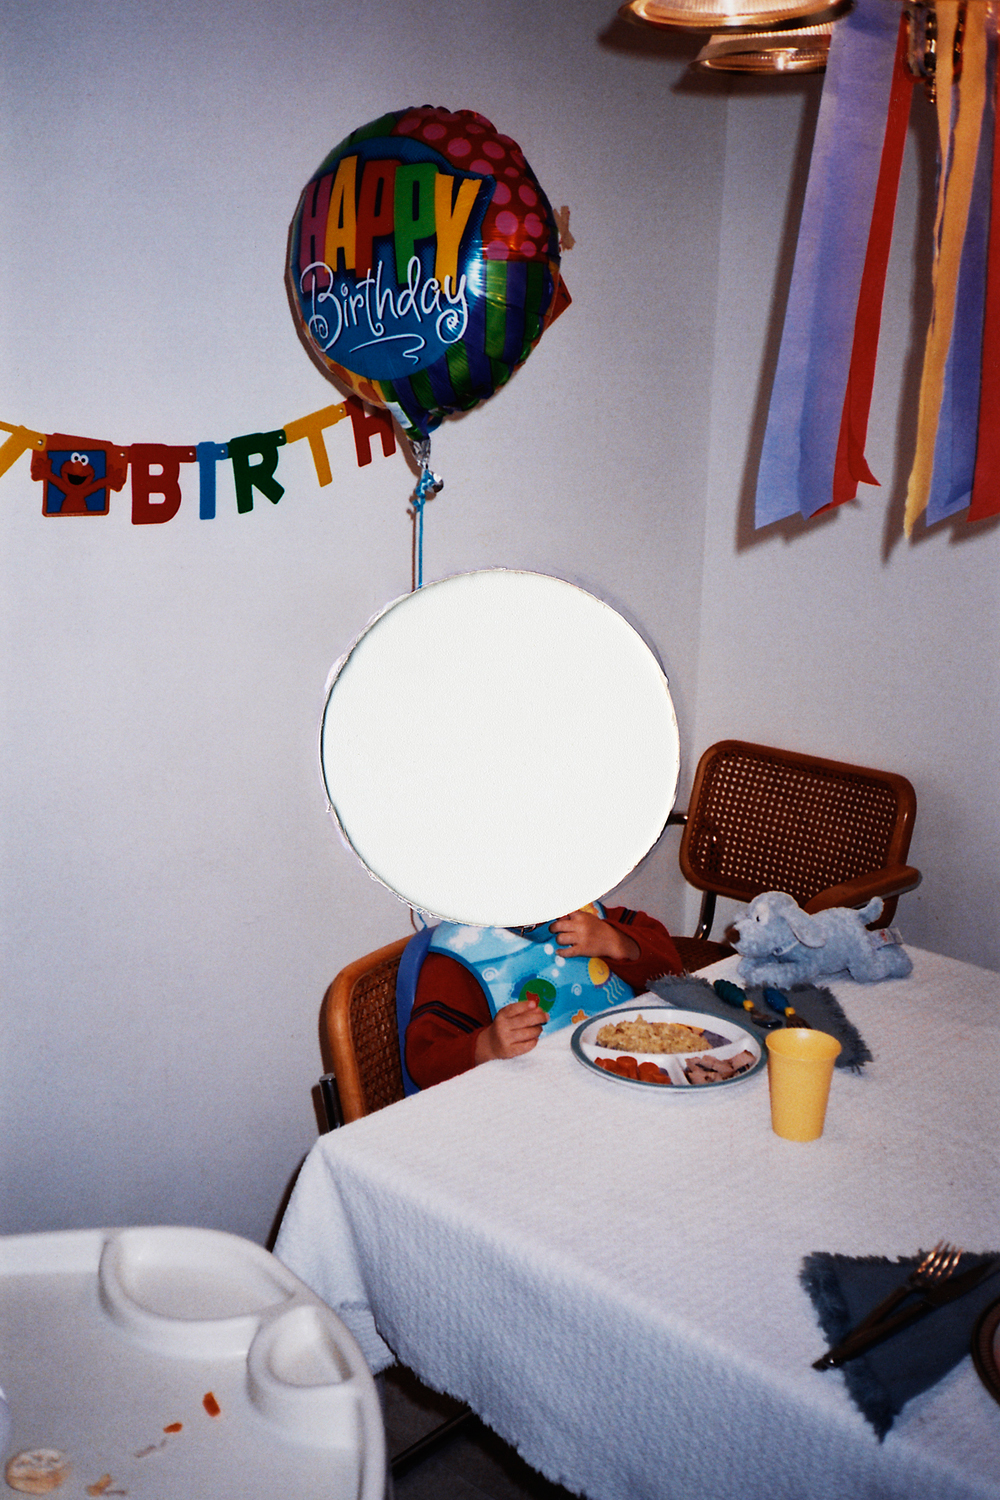 Untitled (Birthday), 2006